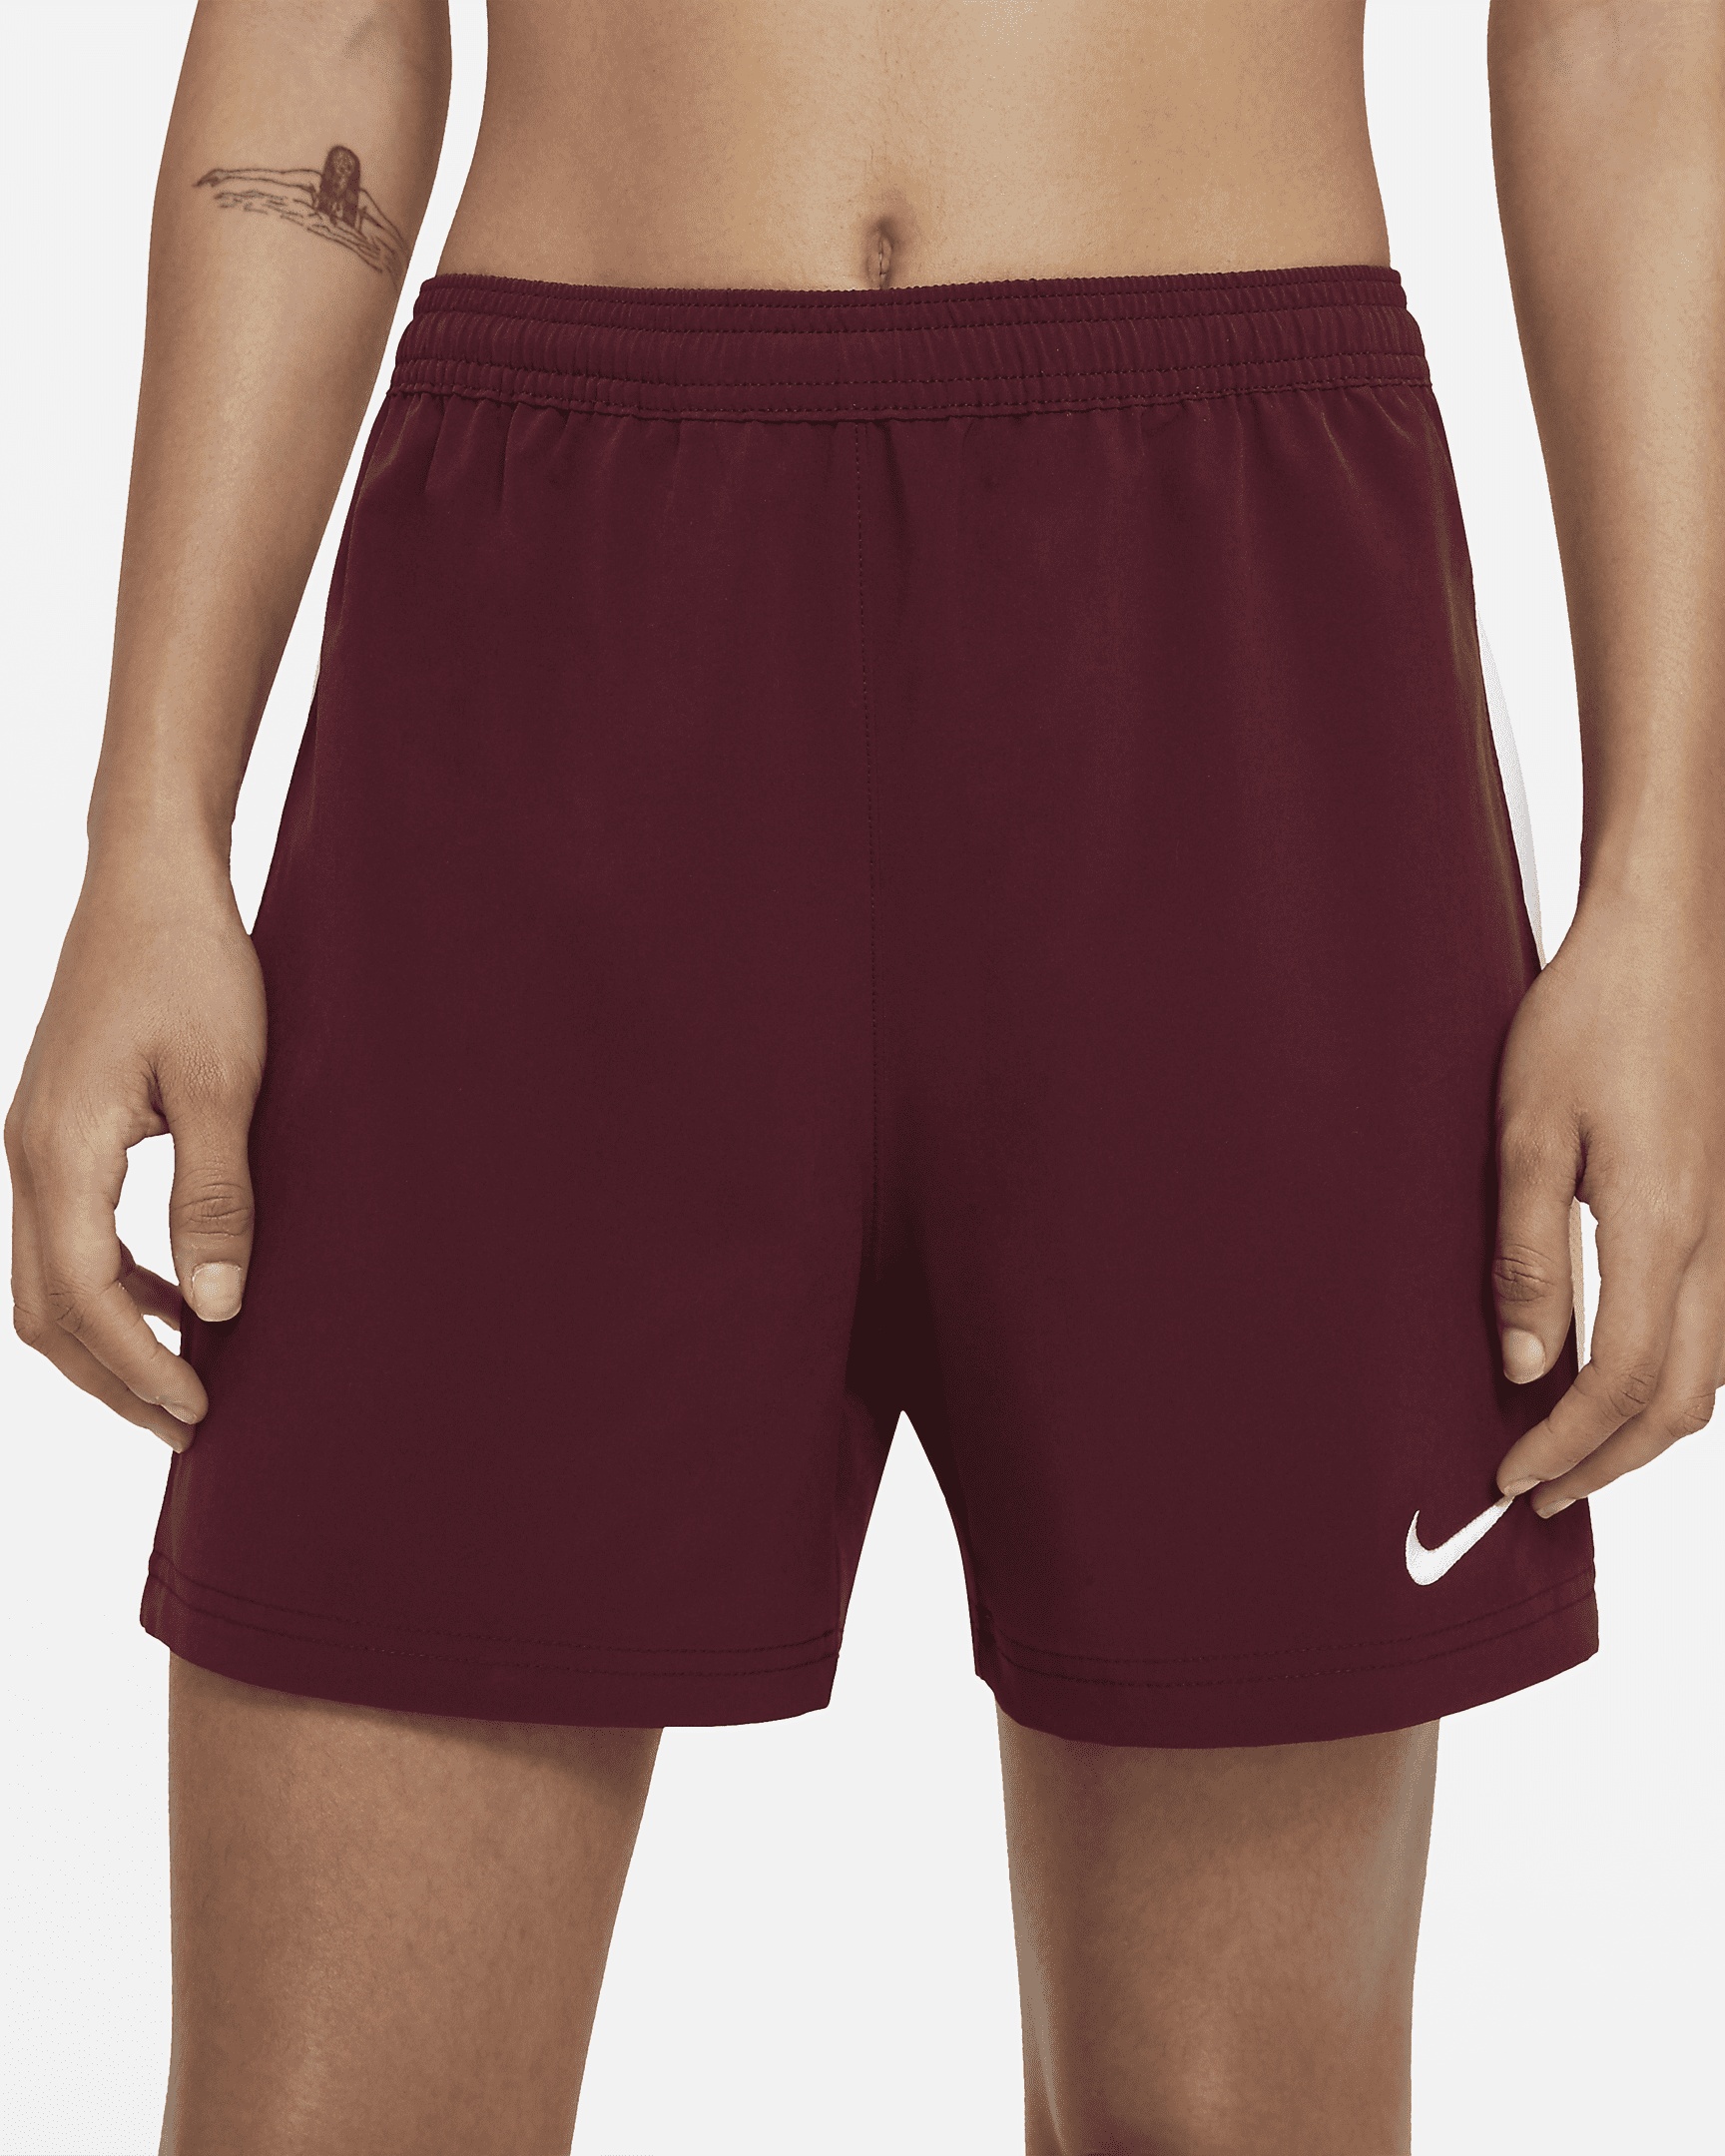 Nike Women's Vapor Flag Football Shorts - 2